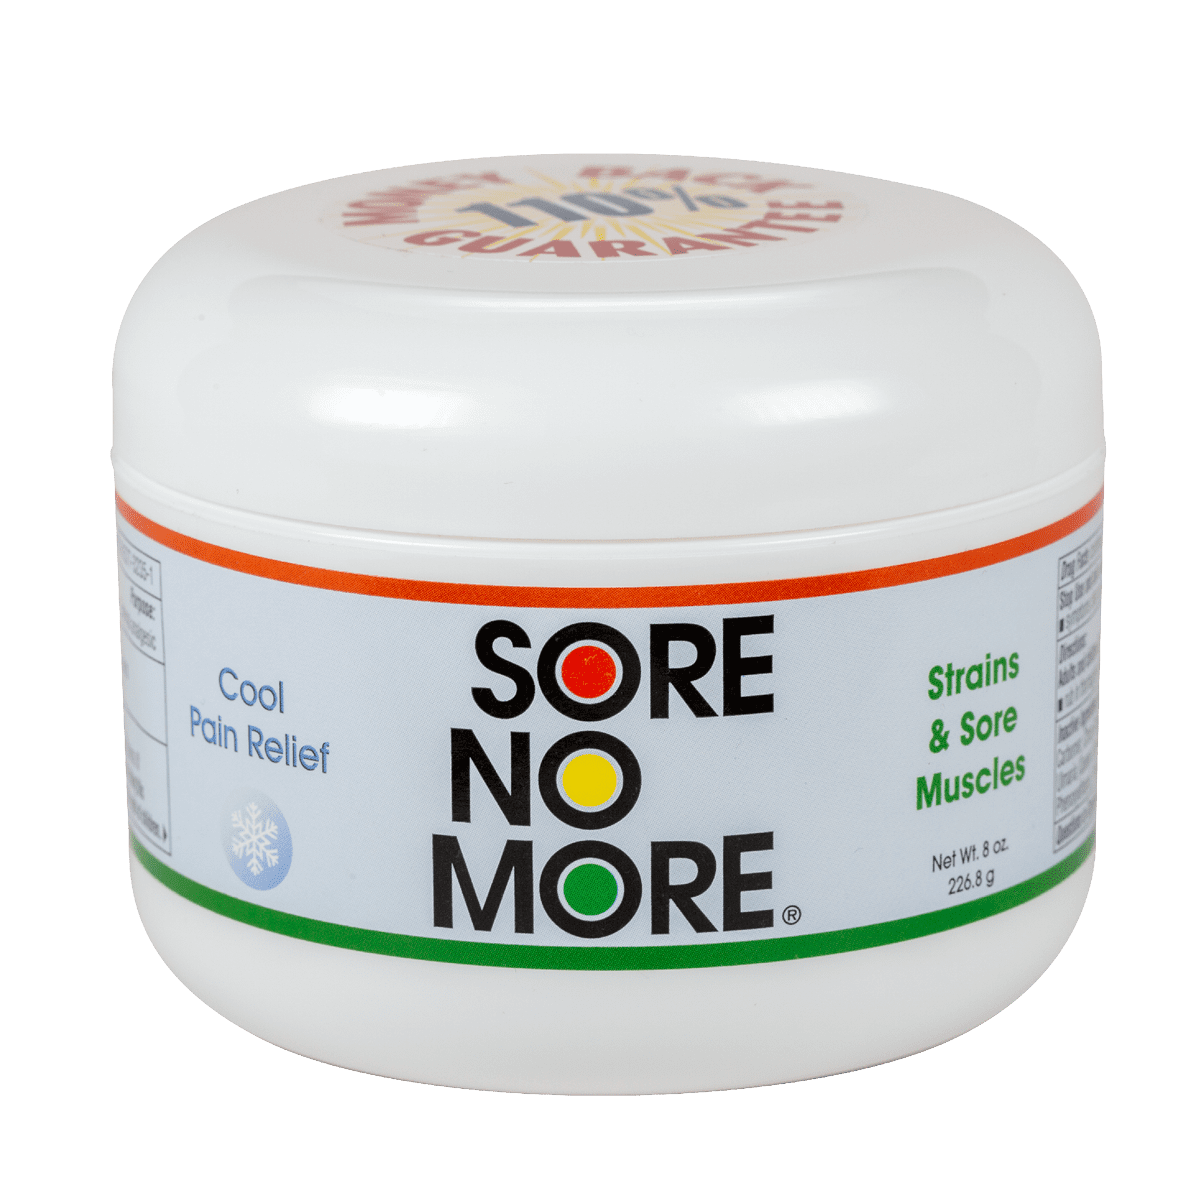 Sore No More® Cool Pain Relief – 8oz Jar